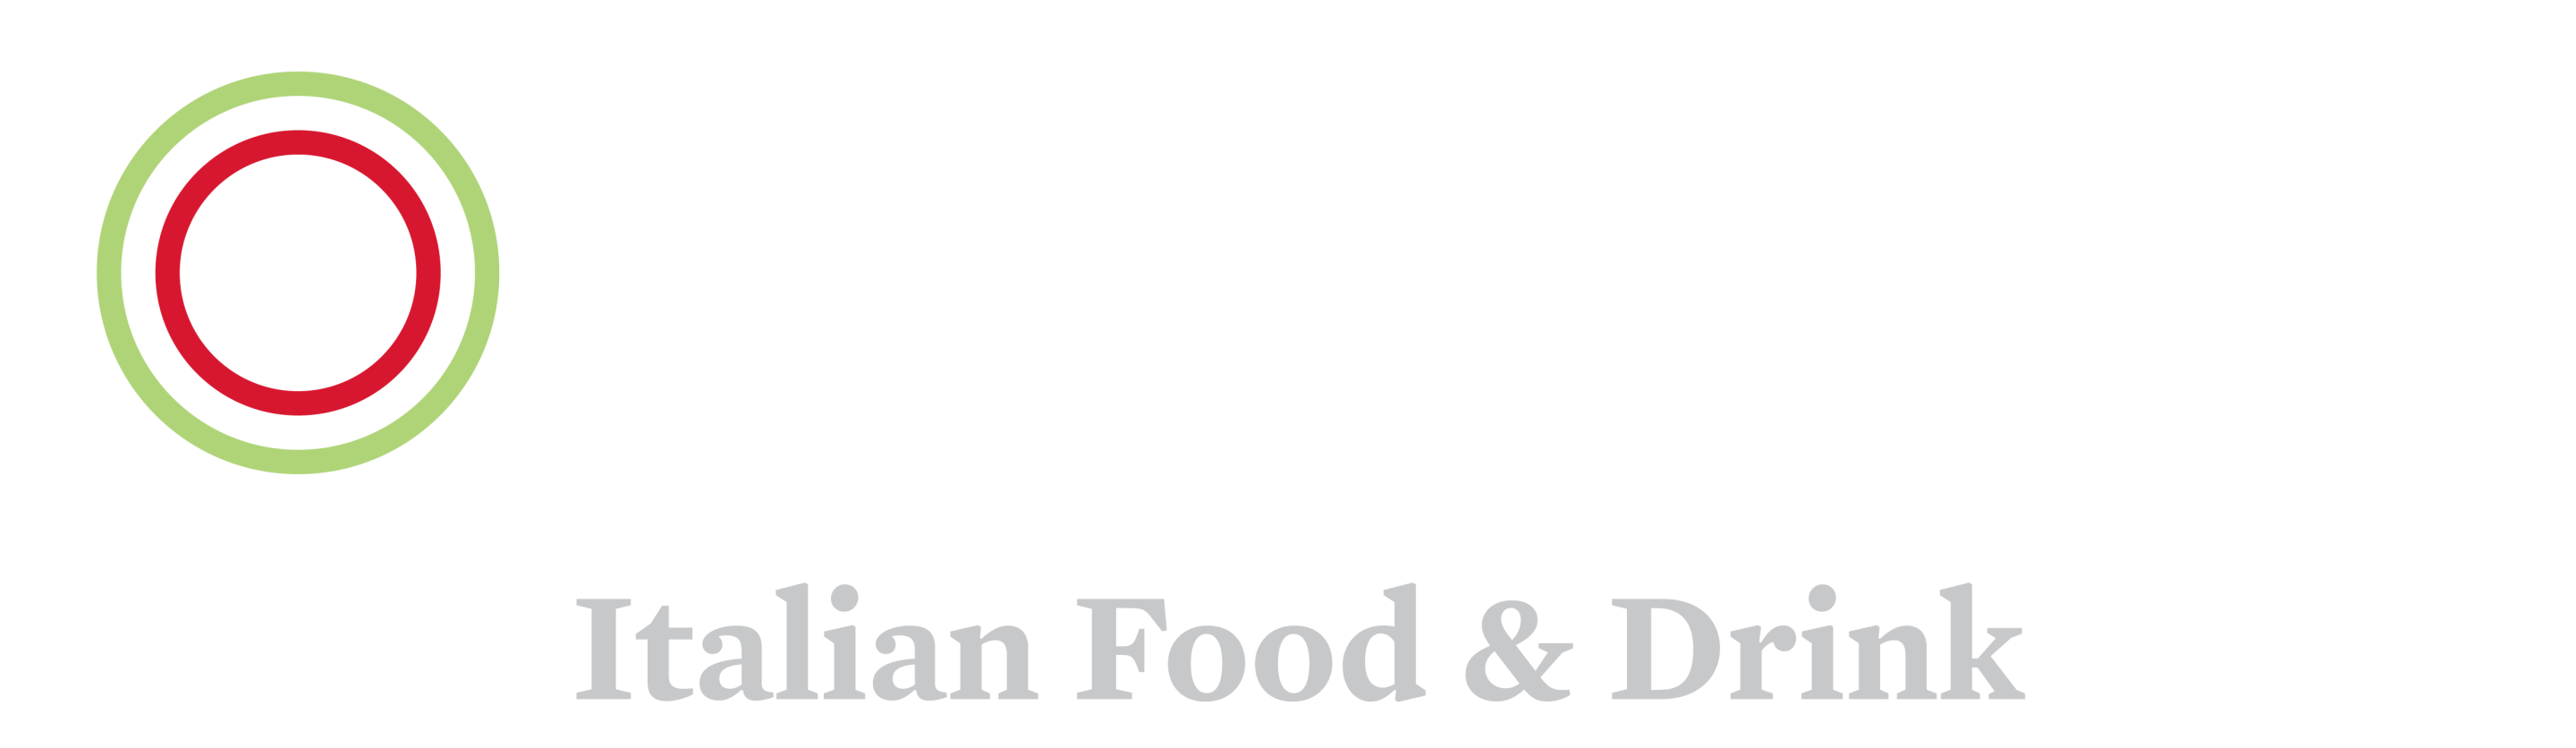 Appetito dark mode logo